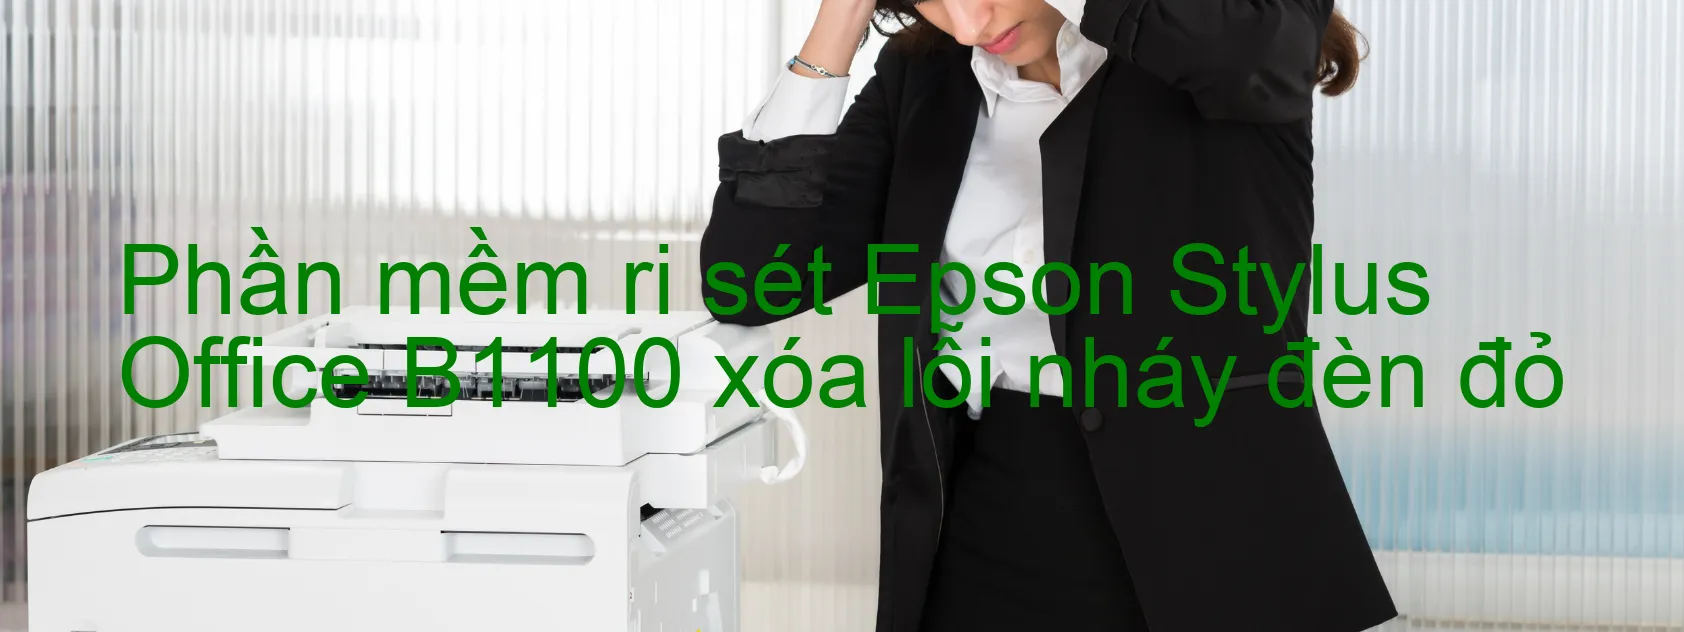 Phần mềm reset Epson Stylus Office B1100 xóa lỗi nháy đèn đỏ